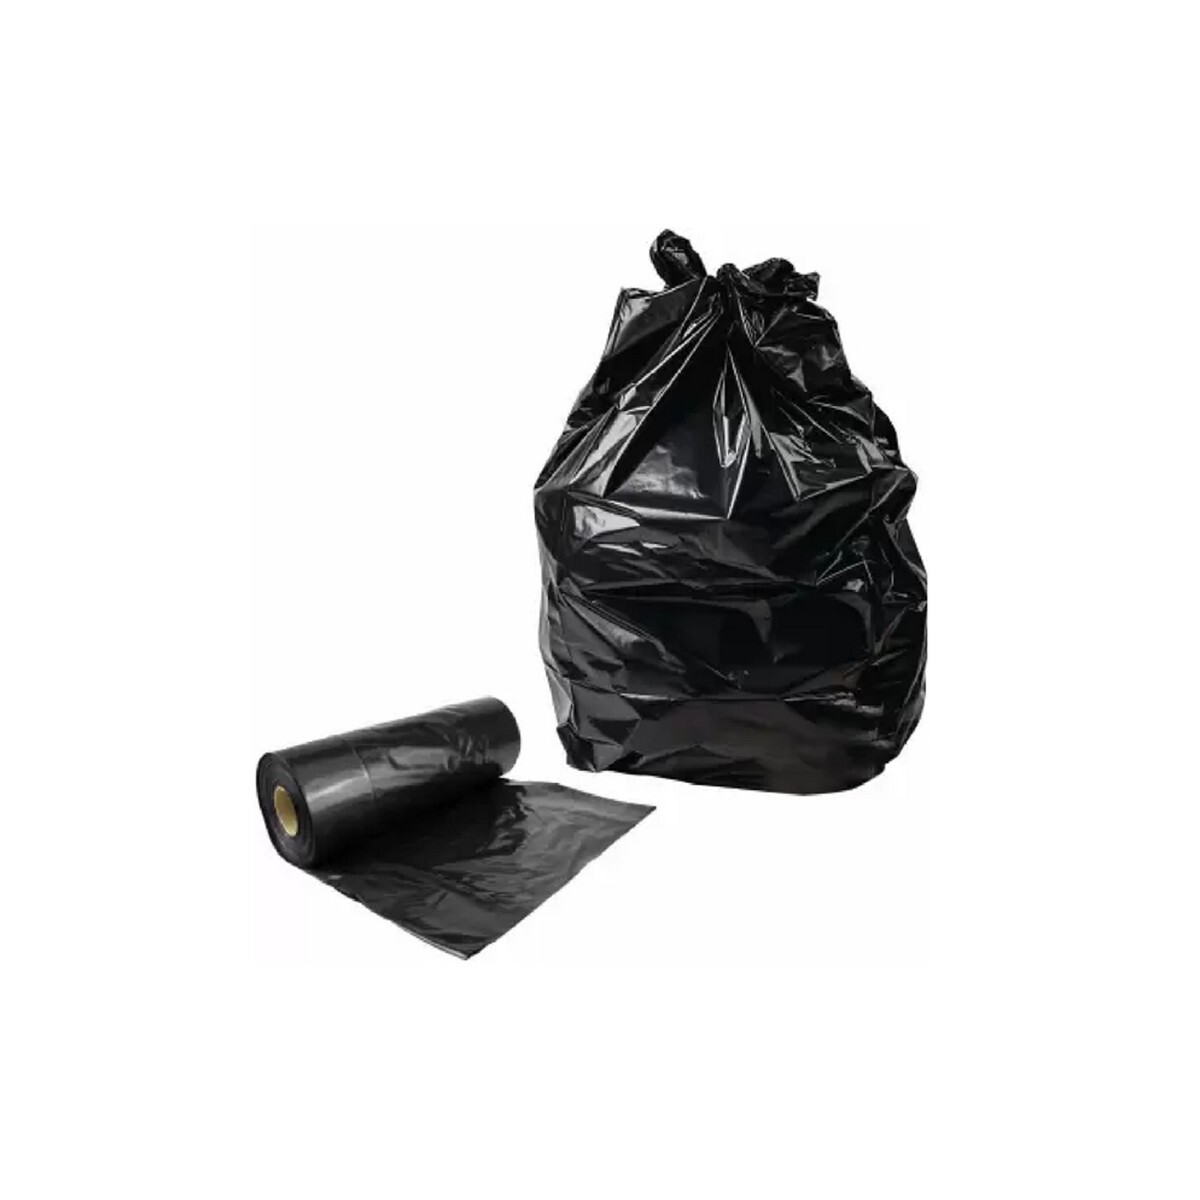 Green Bioblend Garbage Bag 30x50 10pcs